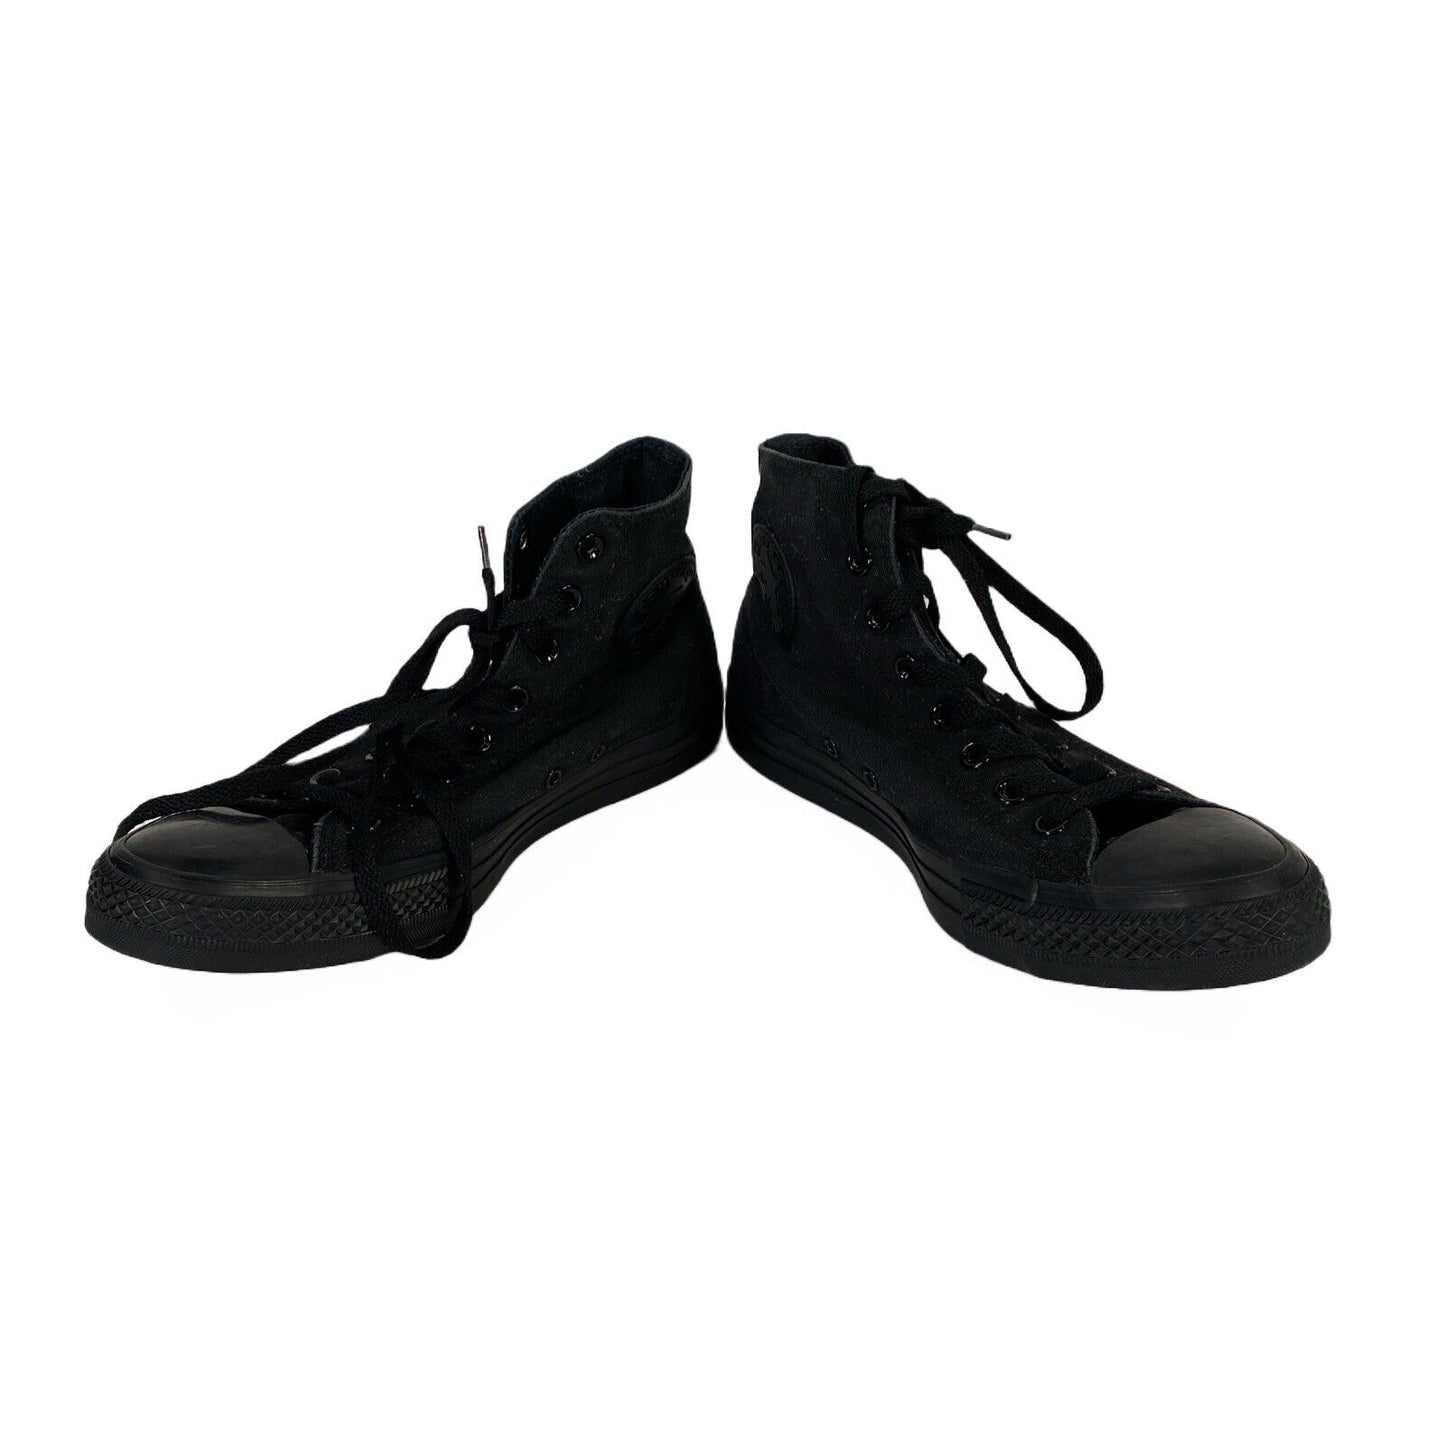 Converse Unisex Black Canvas Lace Up High Top Sneakers - Men's 9